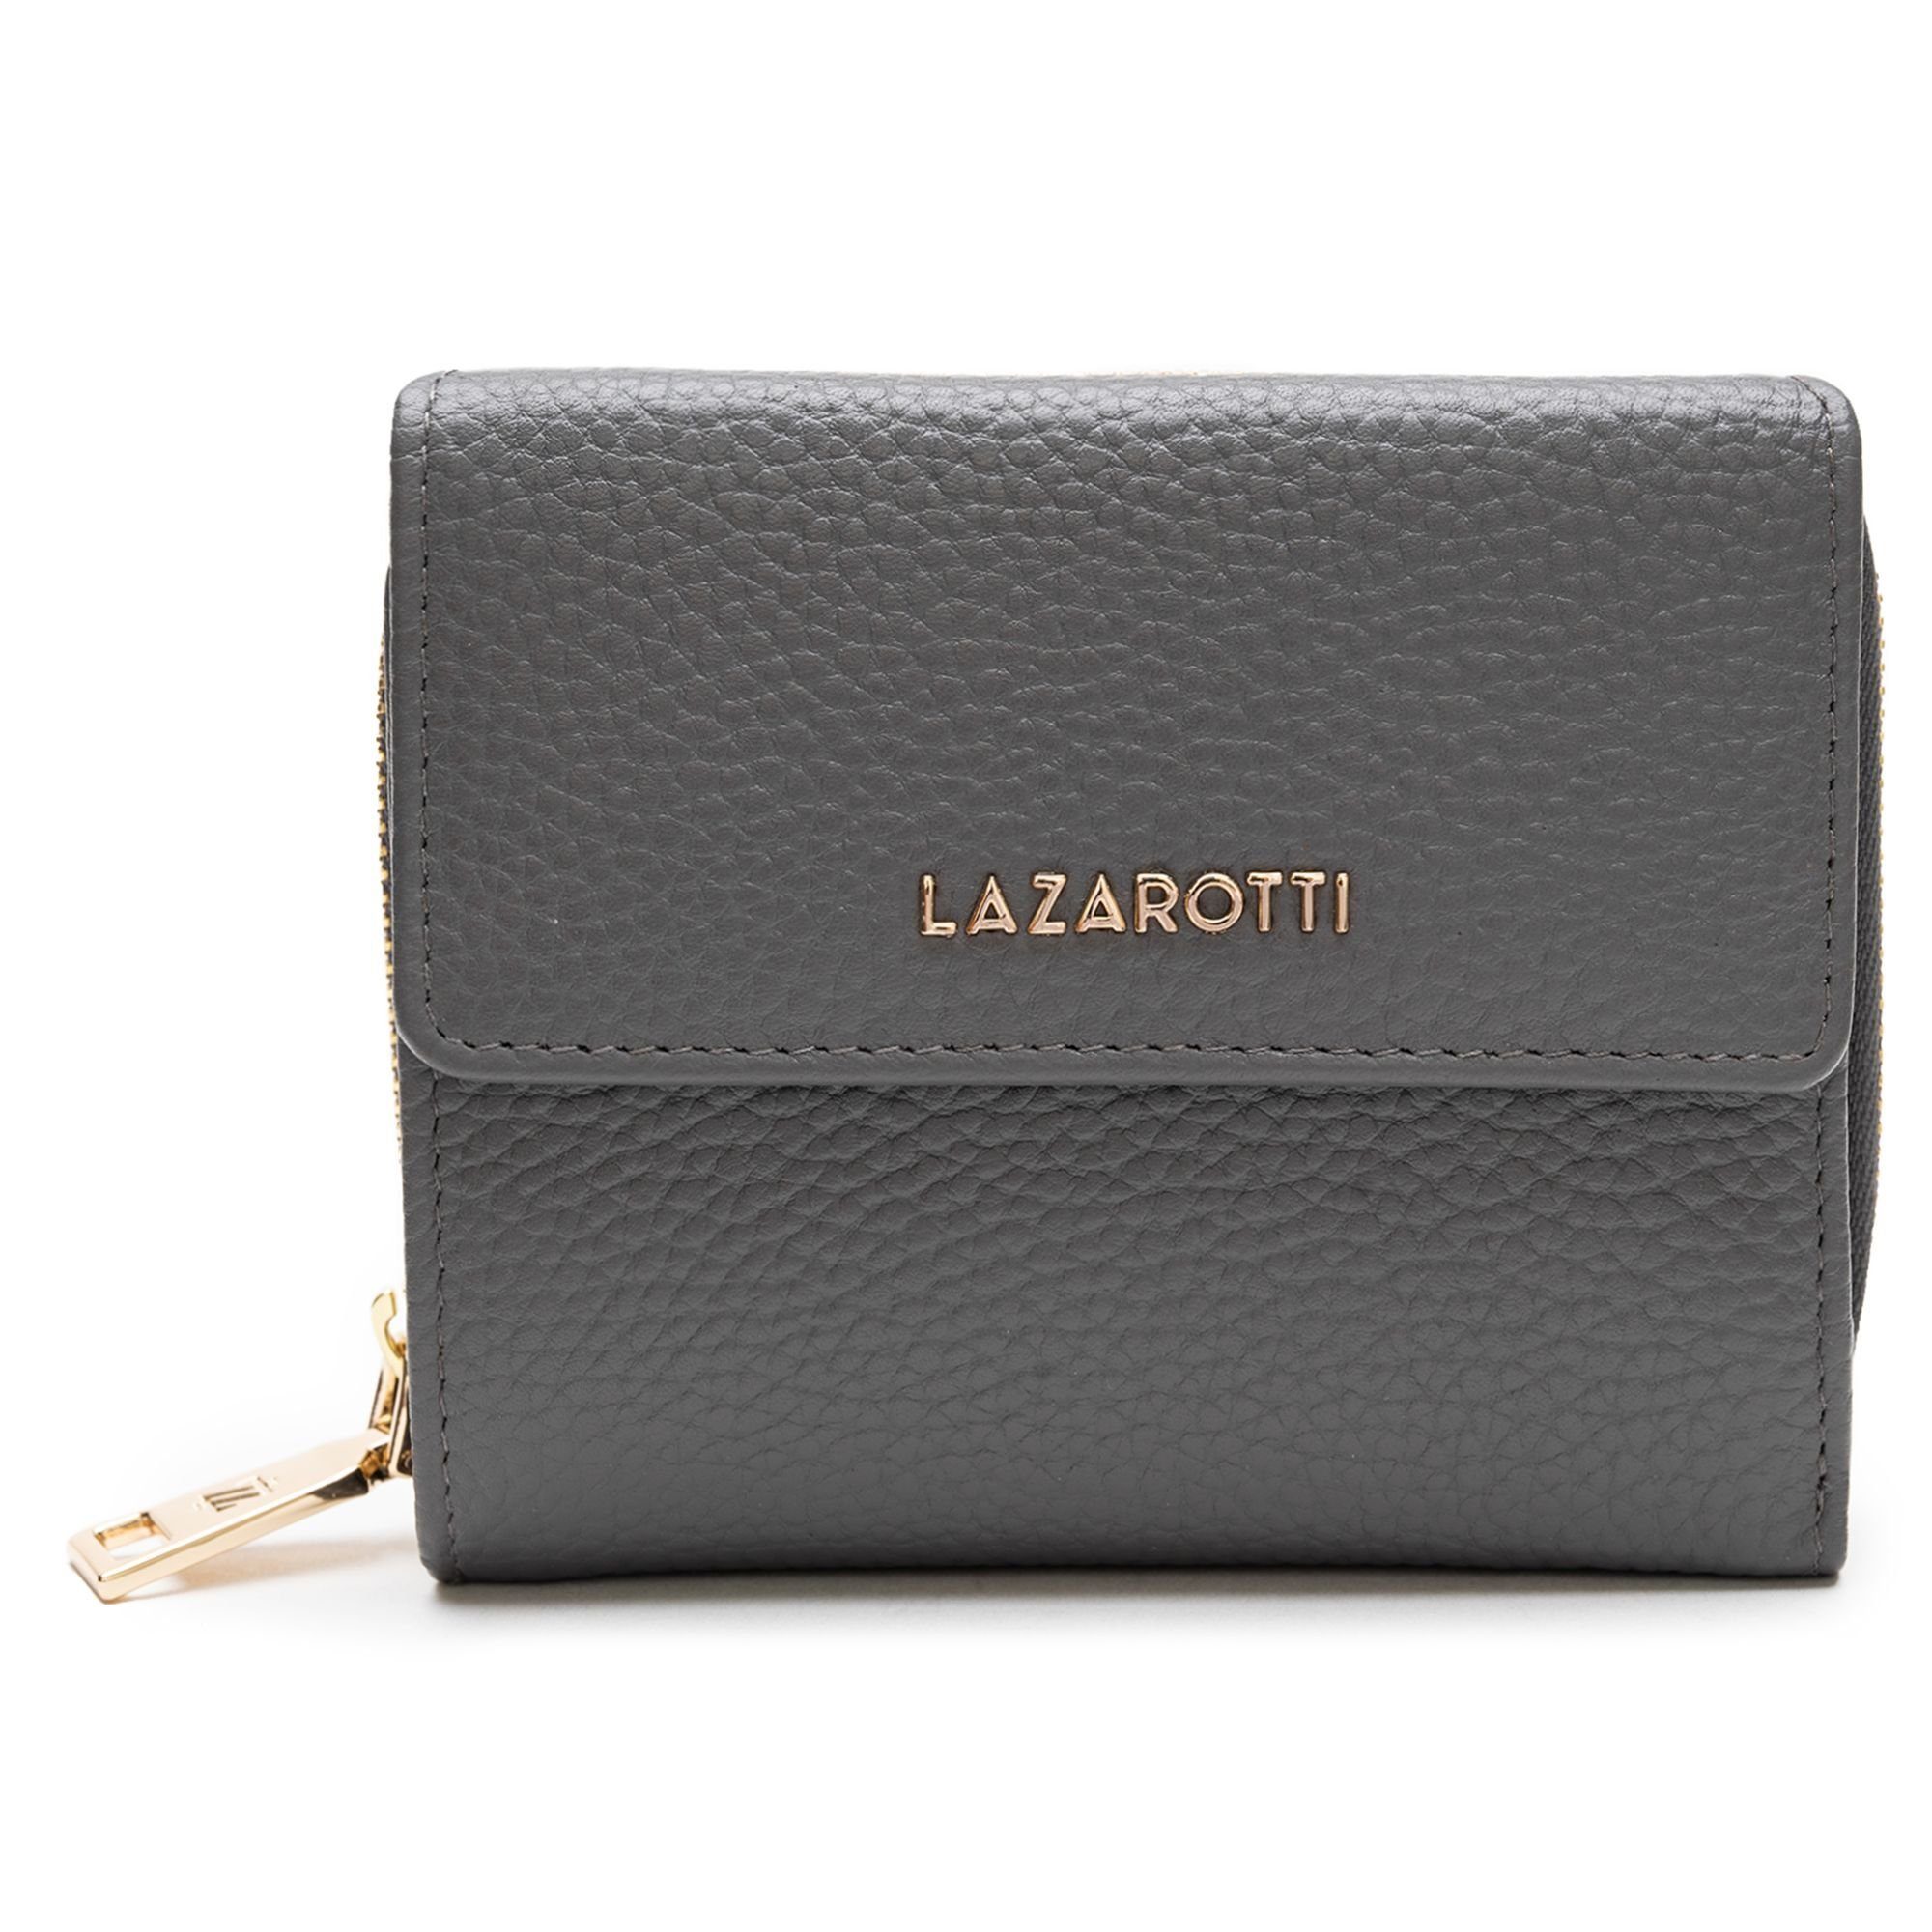 Lazarotti grey Geldbörse Leather, Leder Bologna